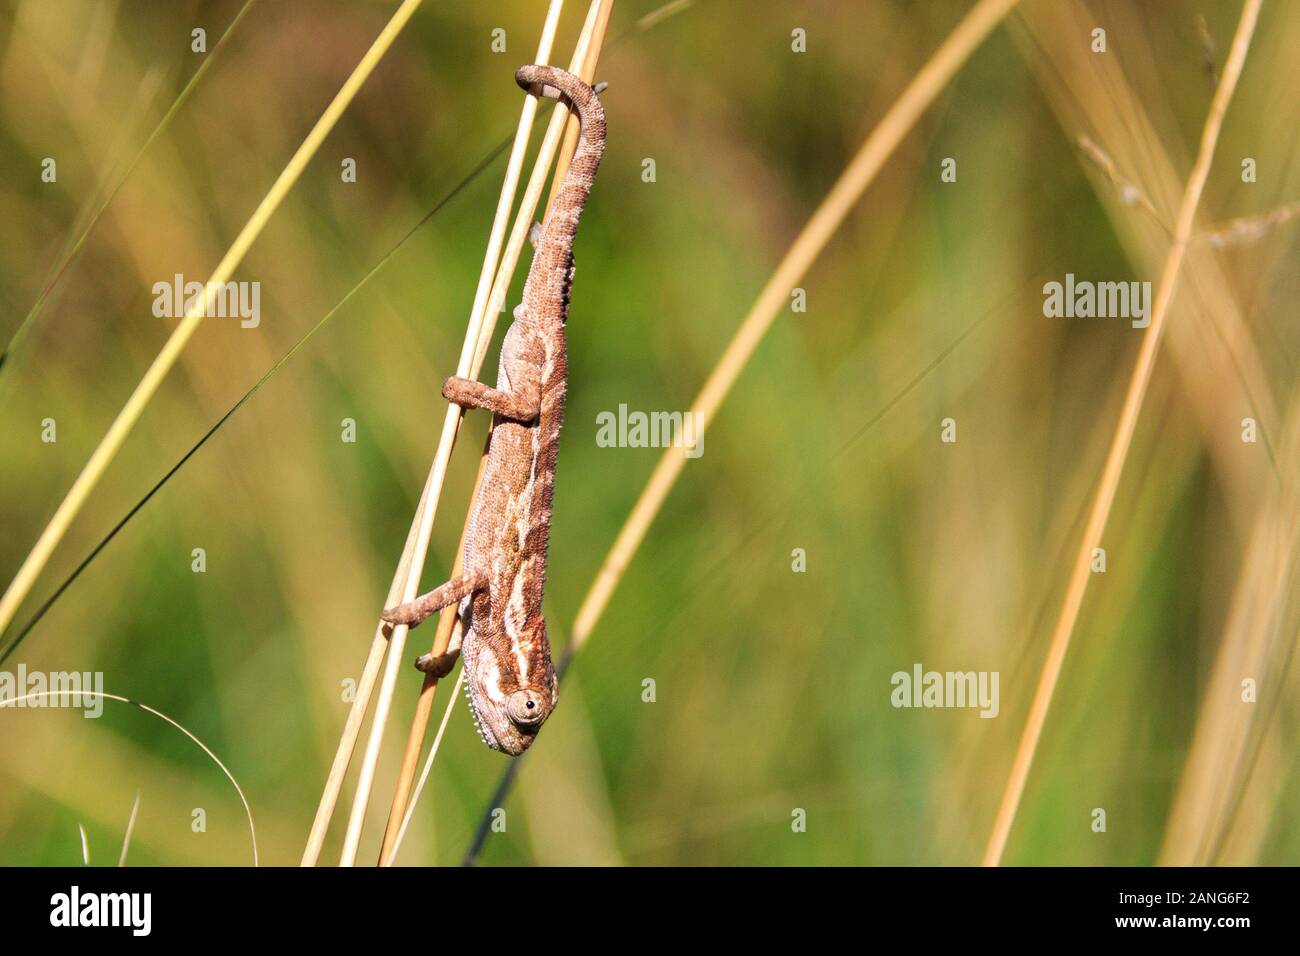 Little brown chameleon climbing on a blade of grass, Drakensberg, South Africa Stock Photo